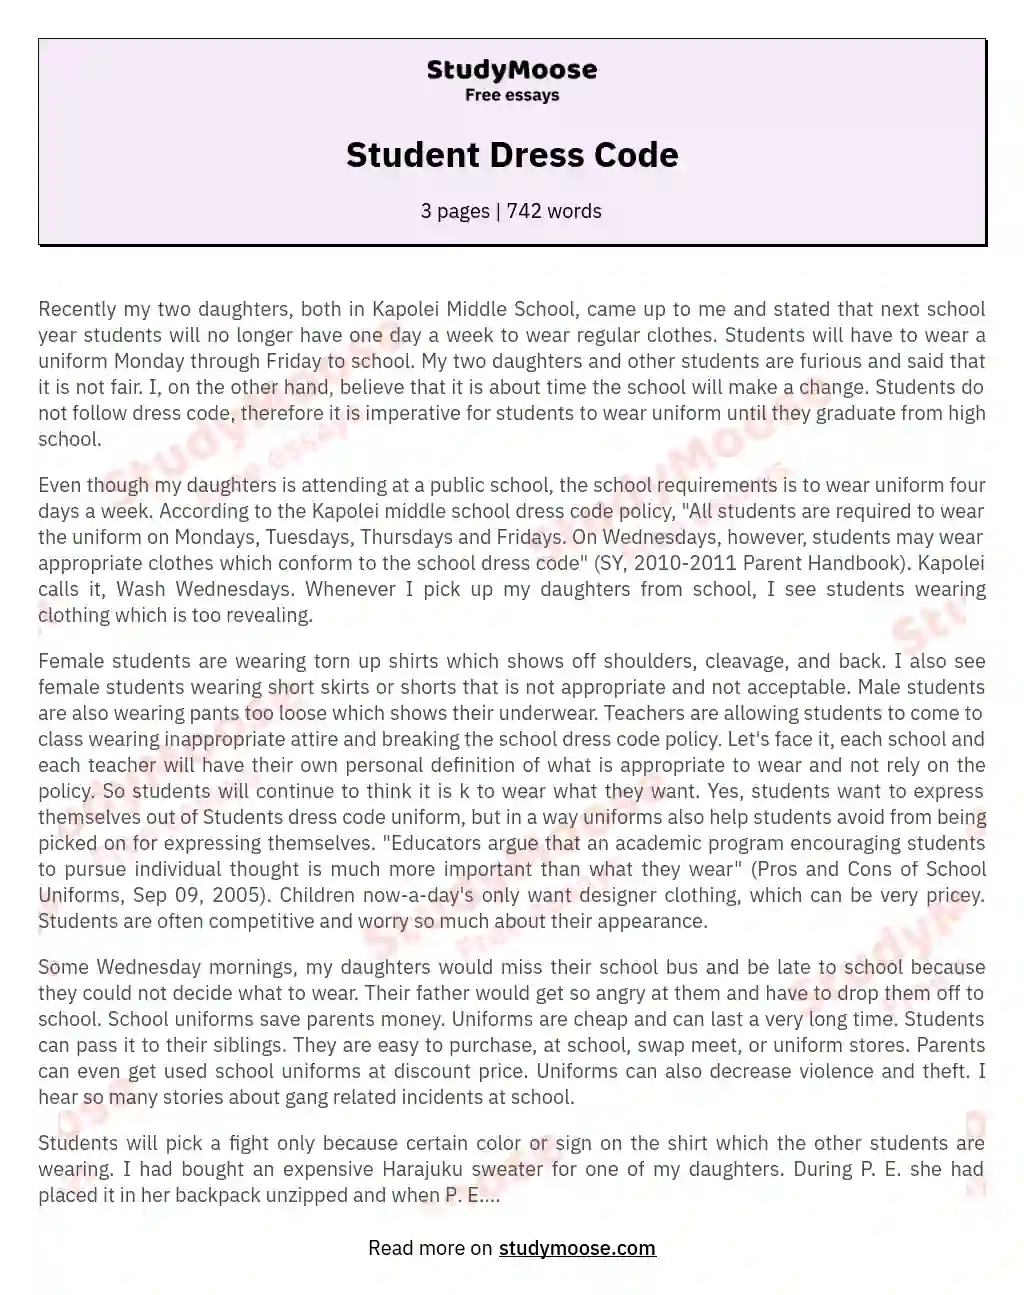 Student Dress Code essay